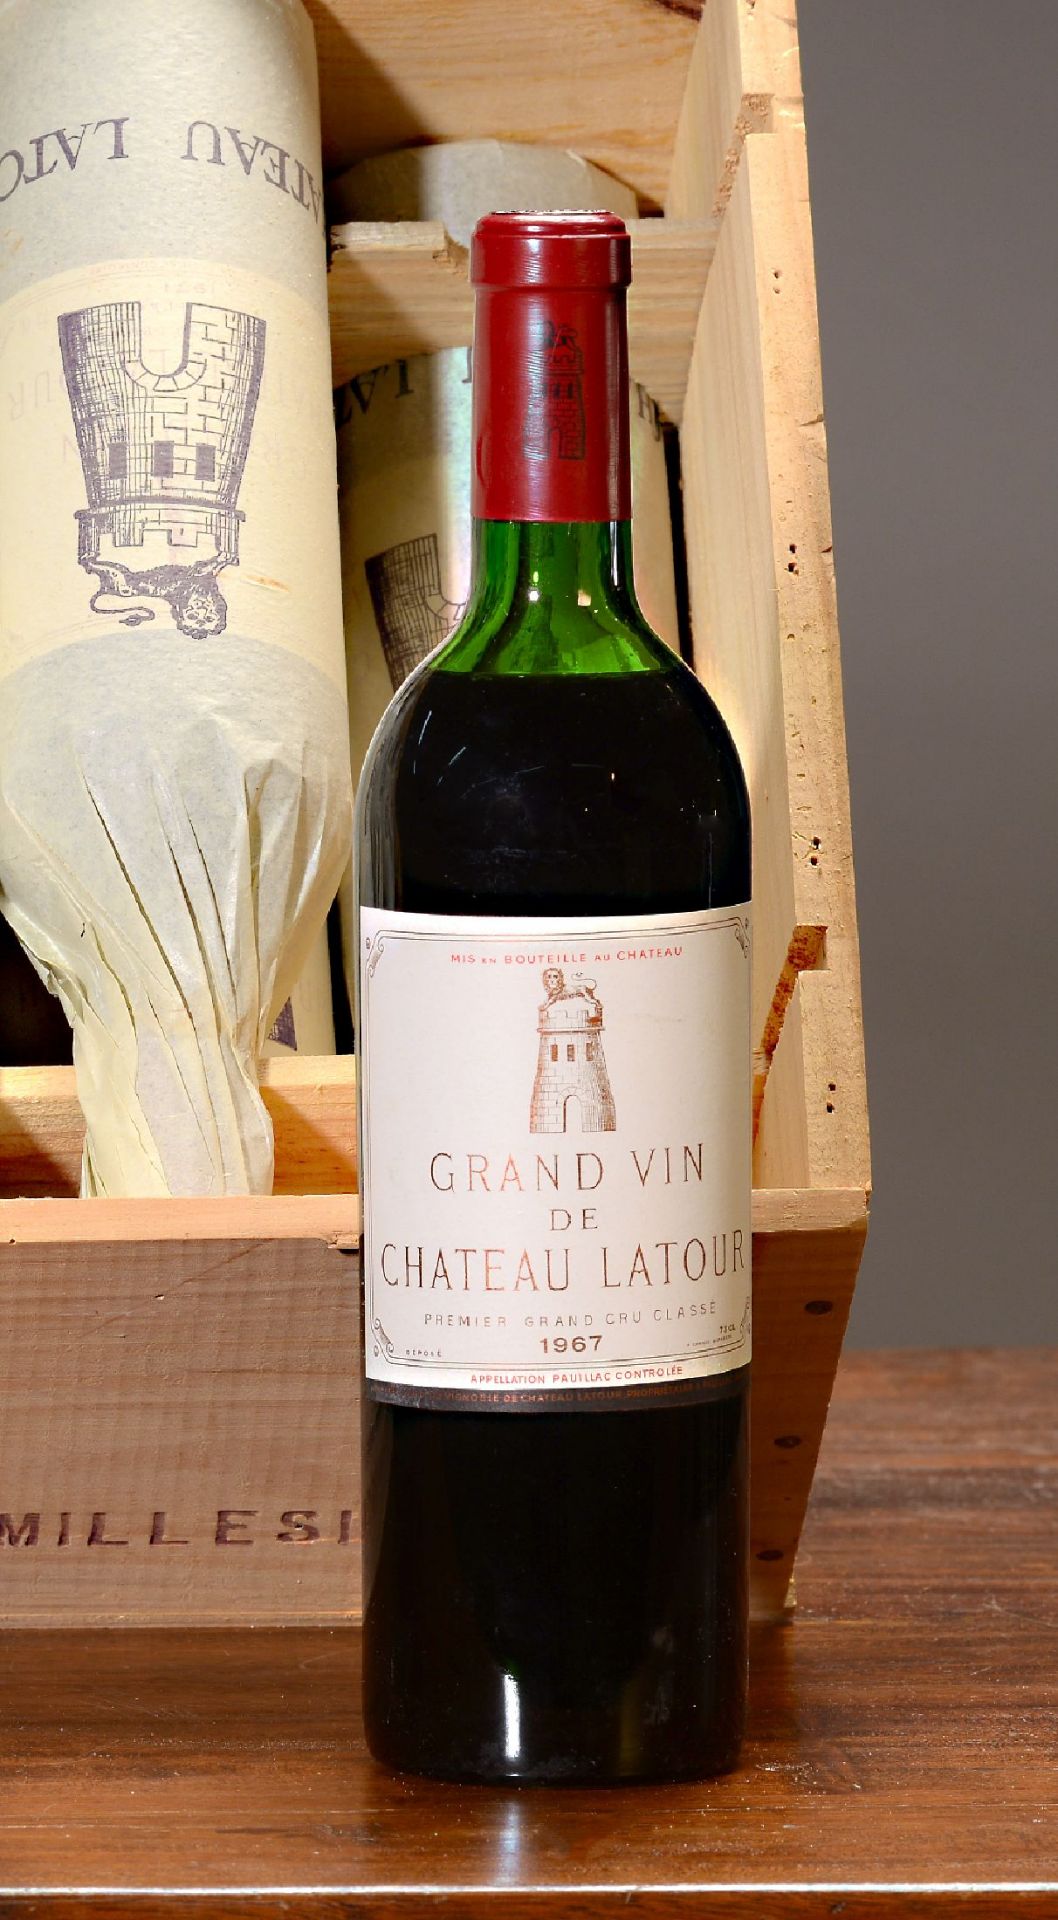 12 Flaschen Chateau Latour Millesime,  Paulliac, premier - Bild 2 aus 2